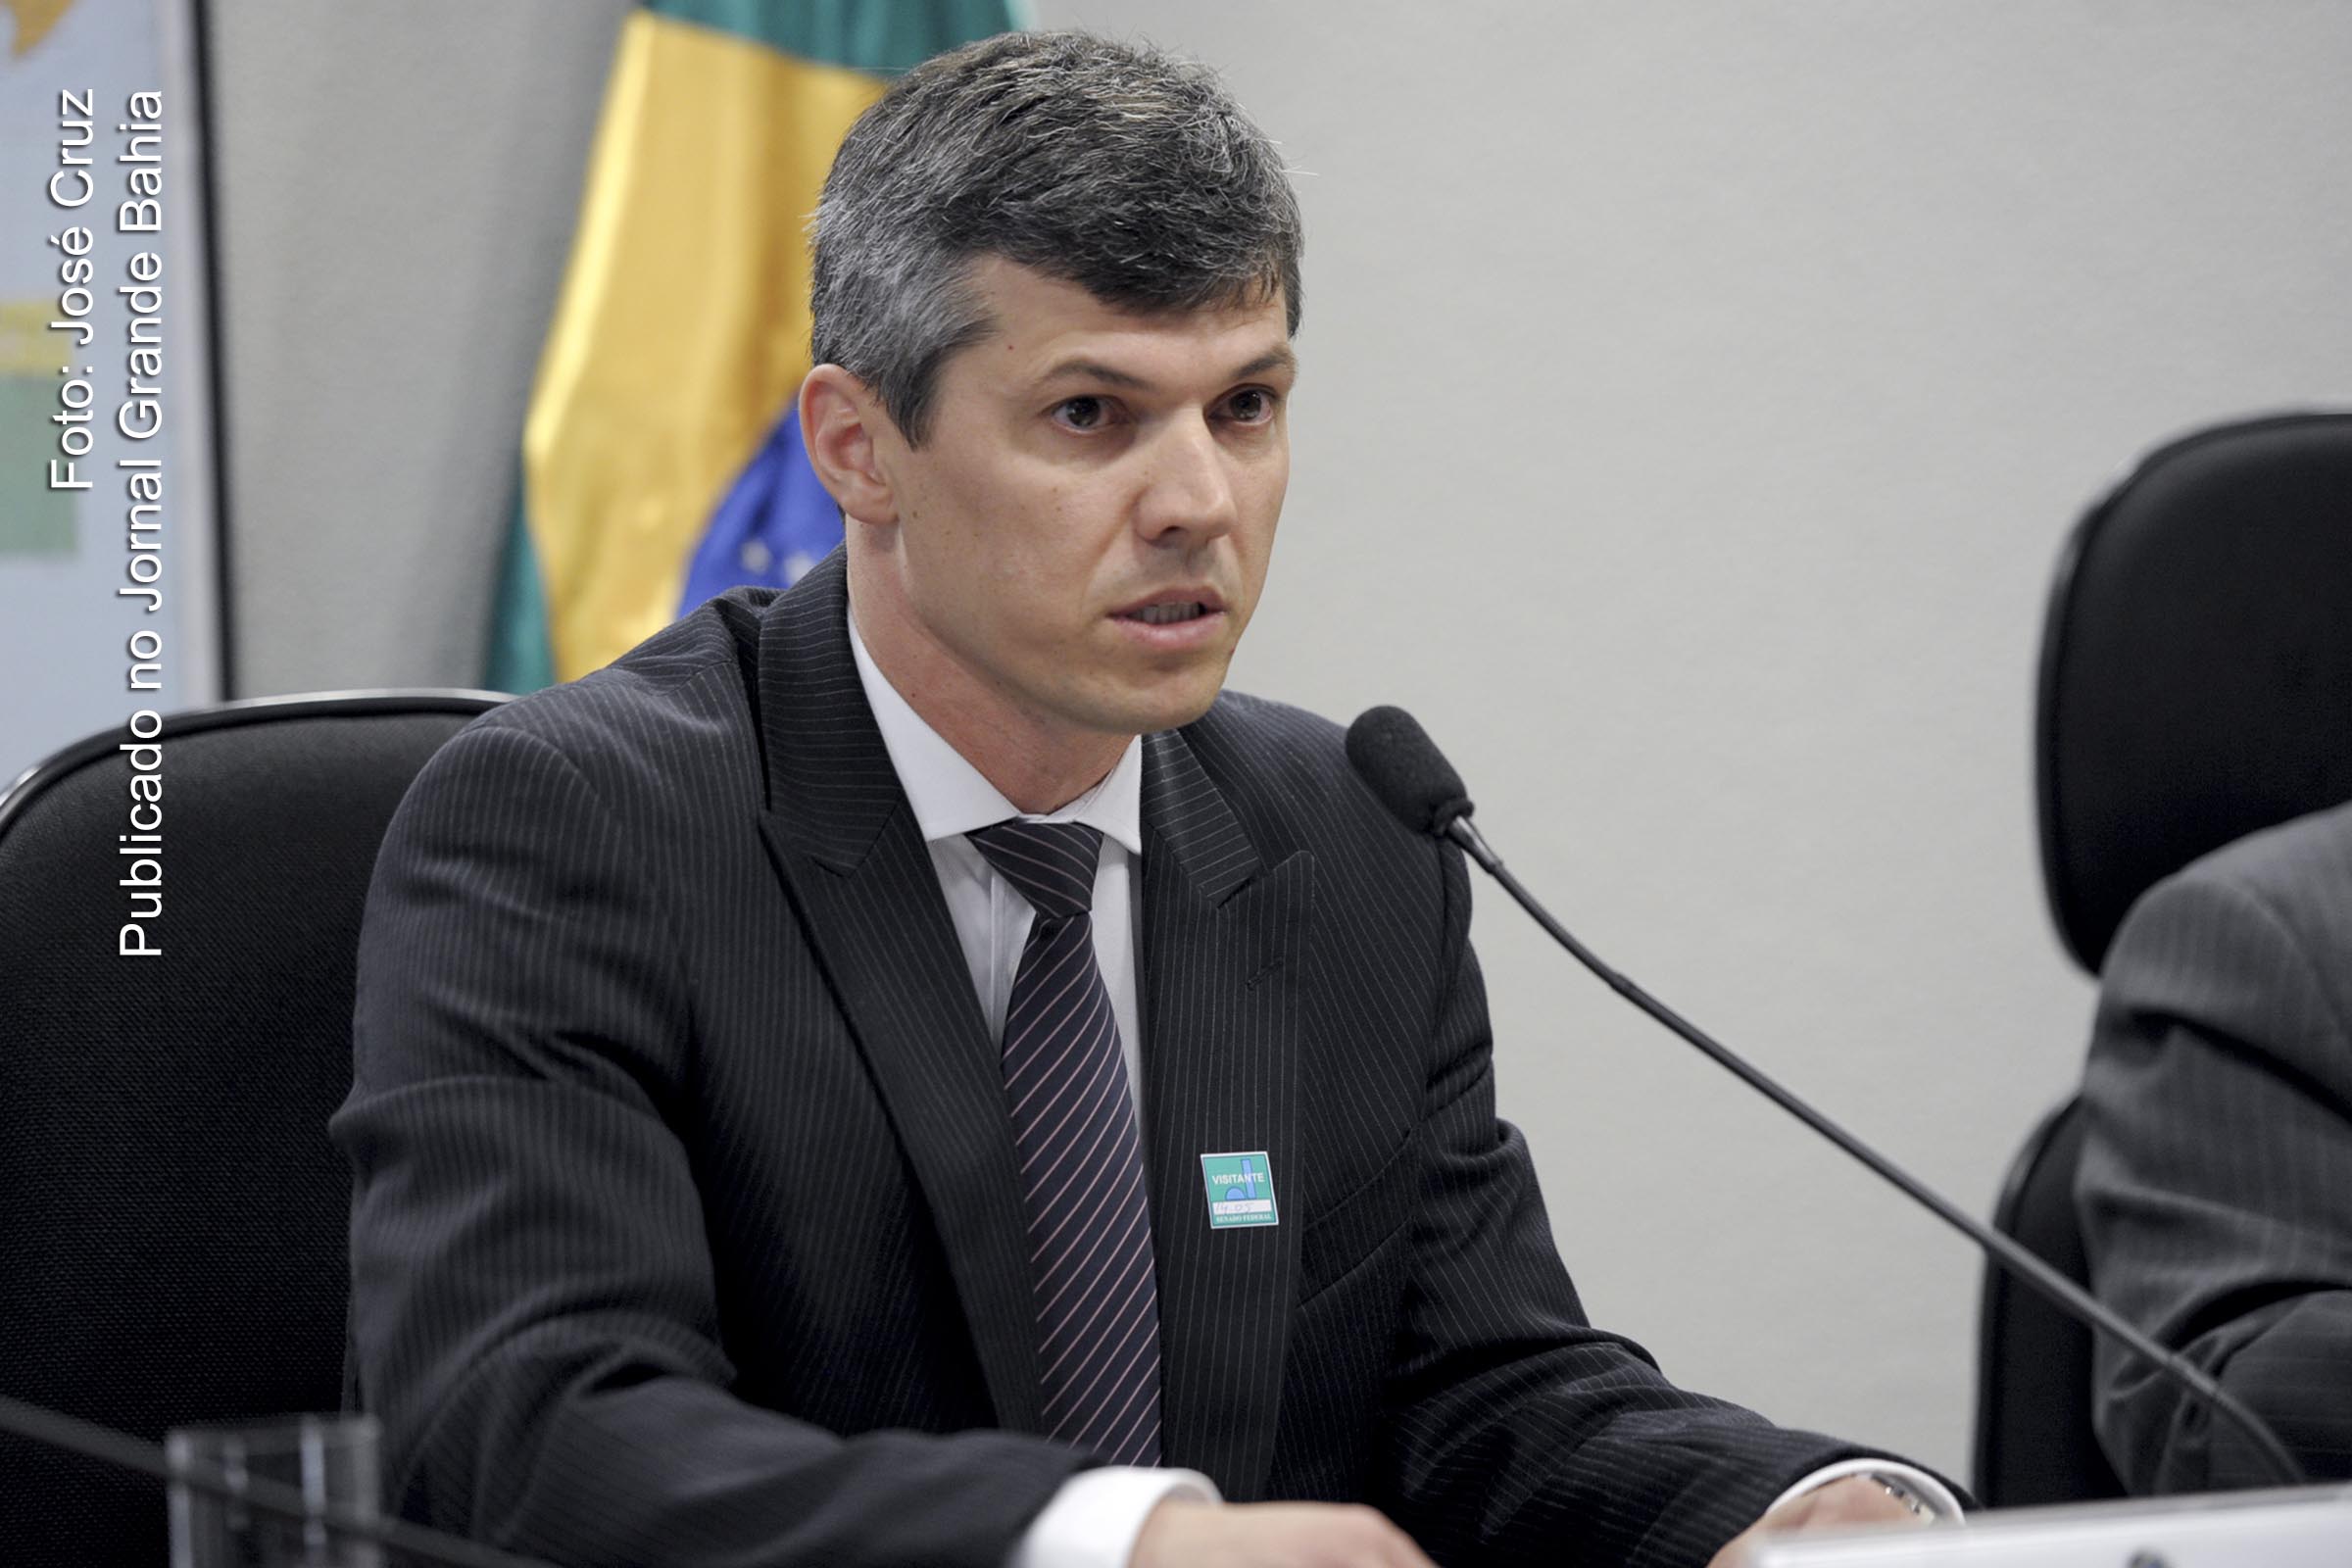 Valter Casimiro Silveira será o novo ministro dos Transportes do Governo Temer.